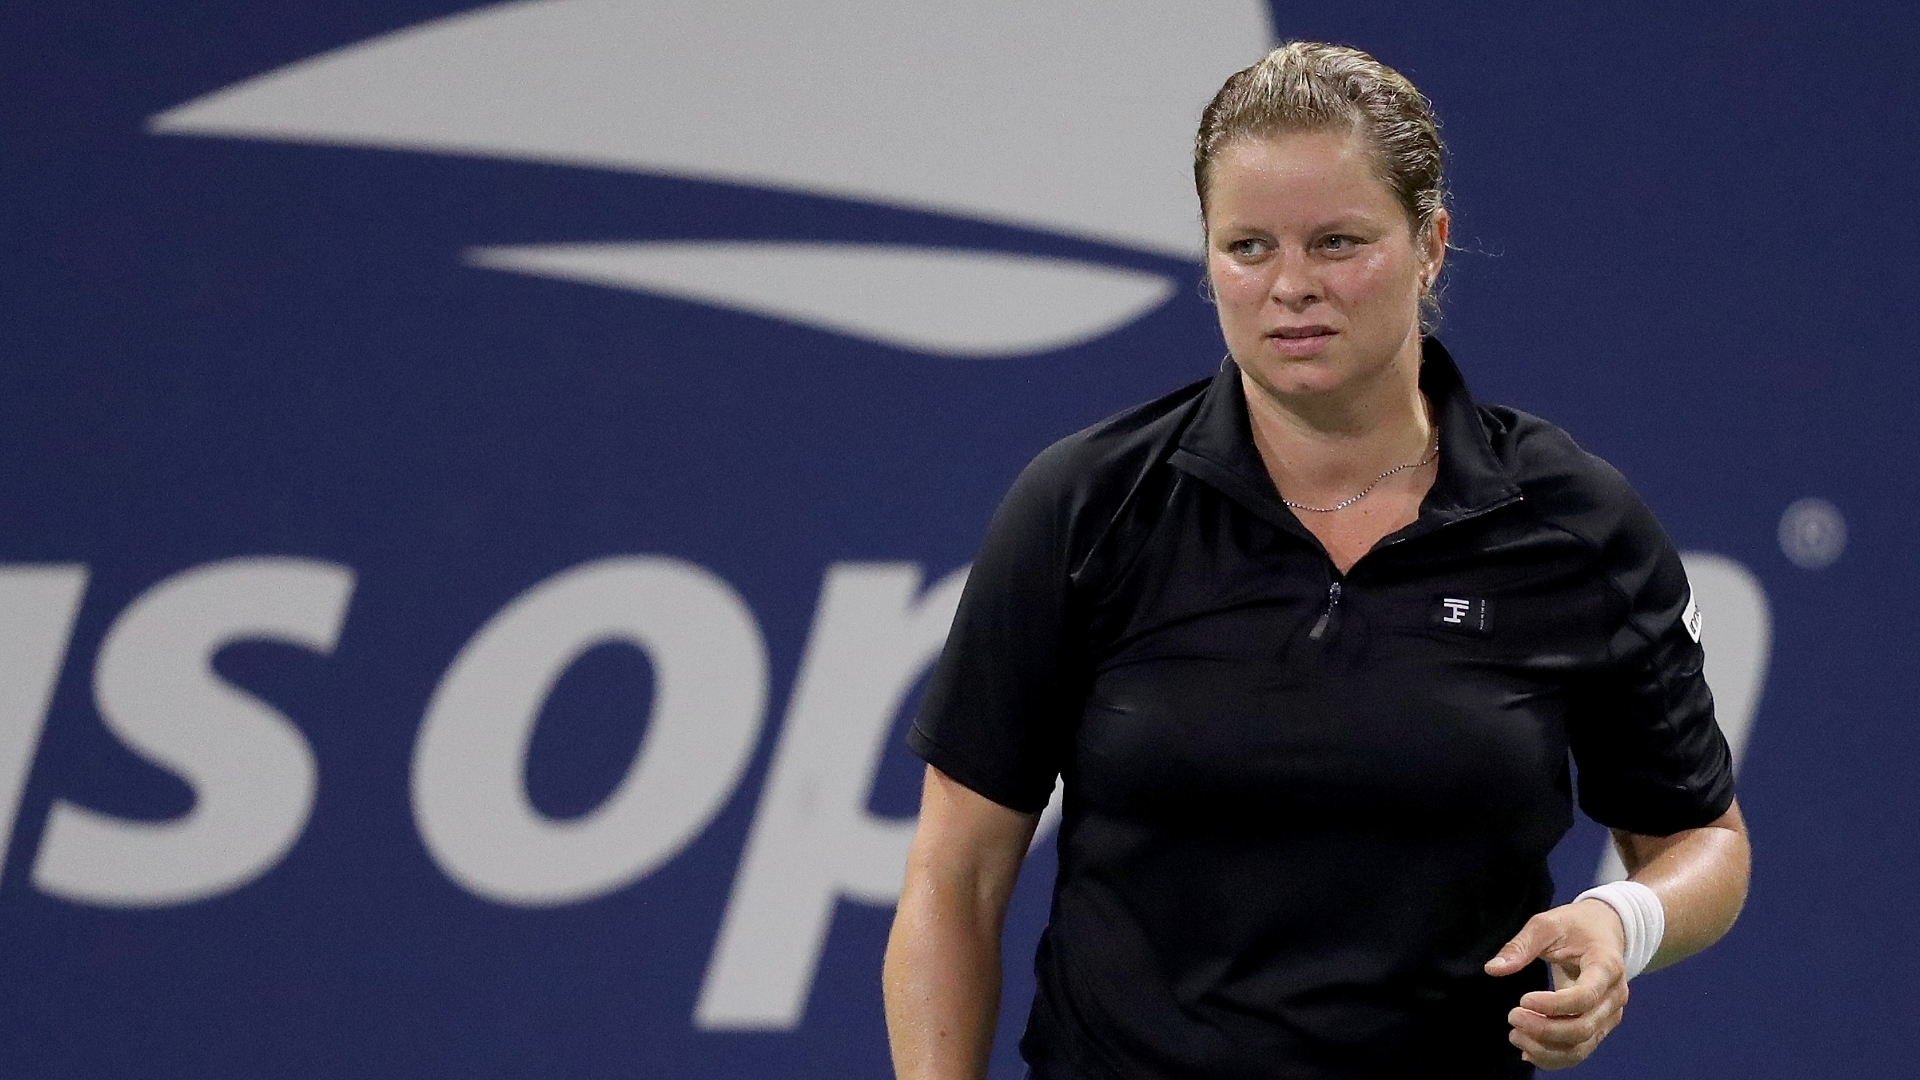 Kim Clijsters falls short in US Open comeback